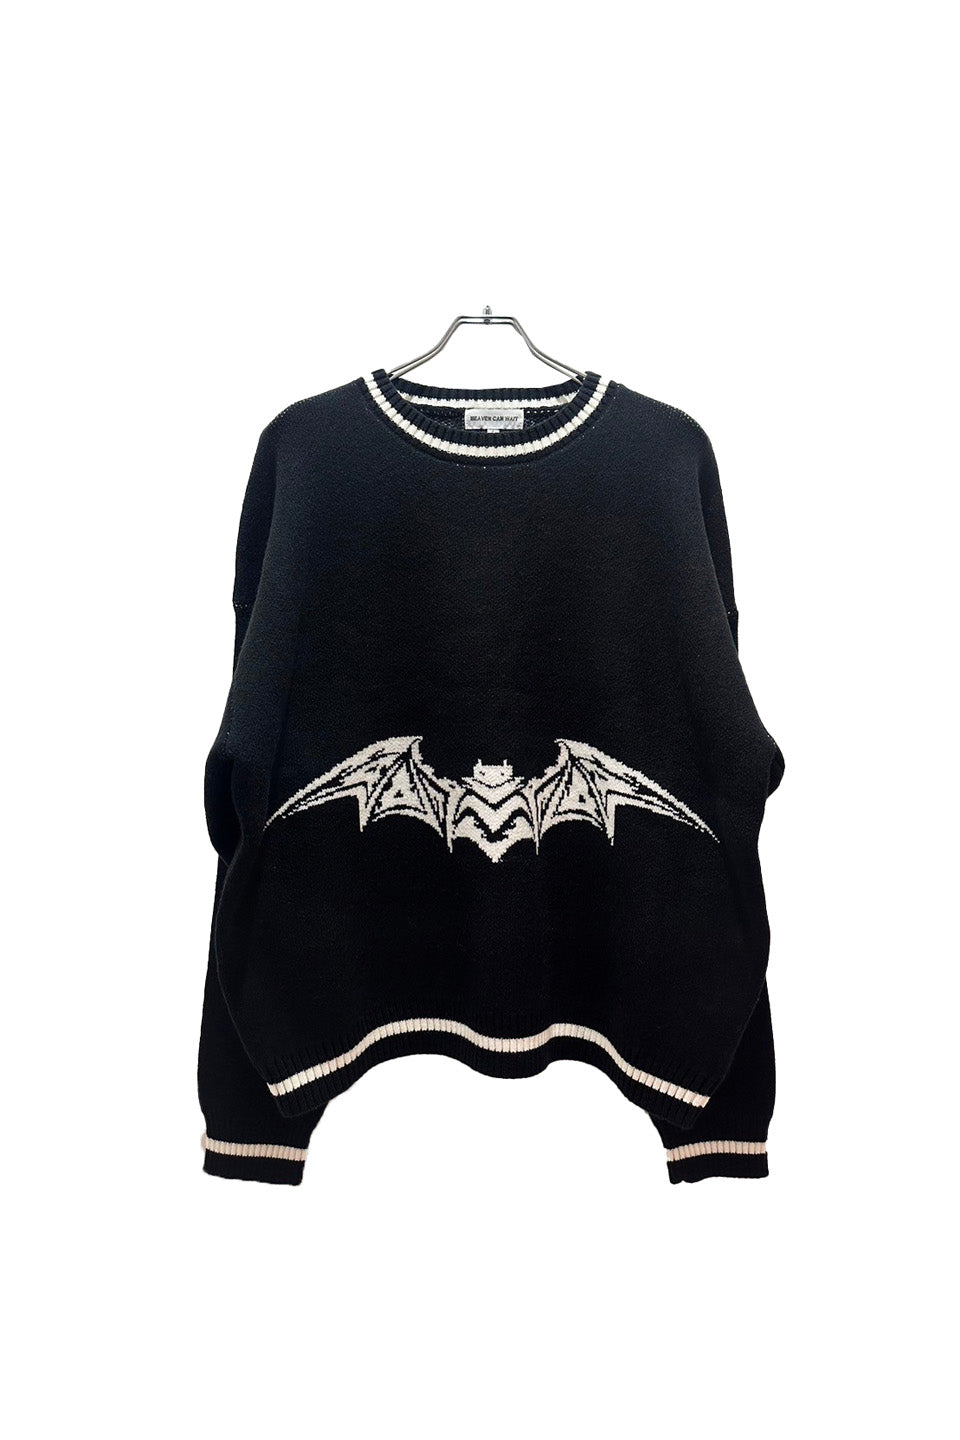 HCW Bat Knit - black / XL